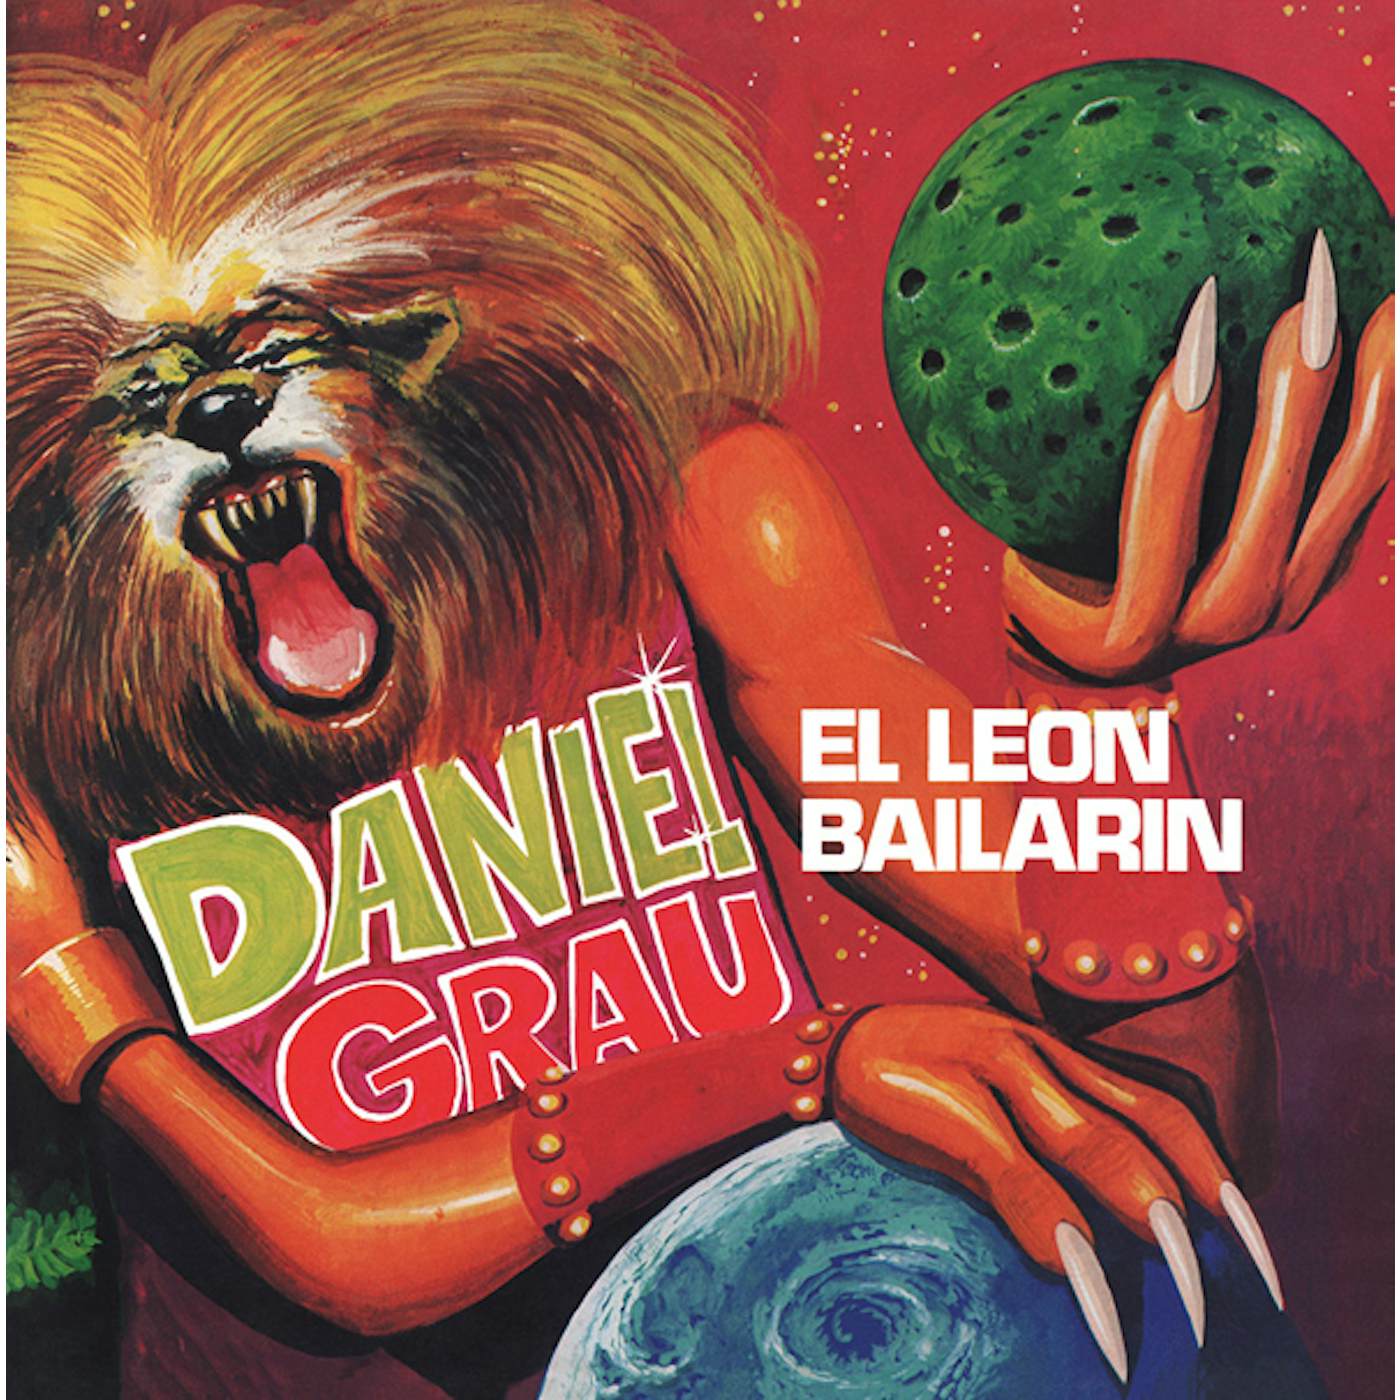 Daniel Grau El Leon Bailarin Vinyl Record